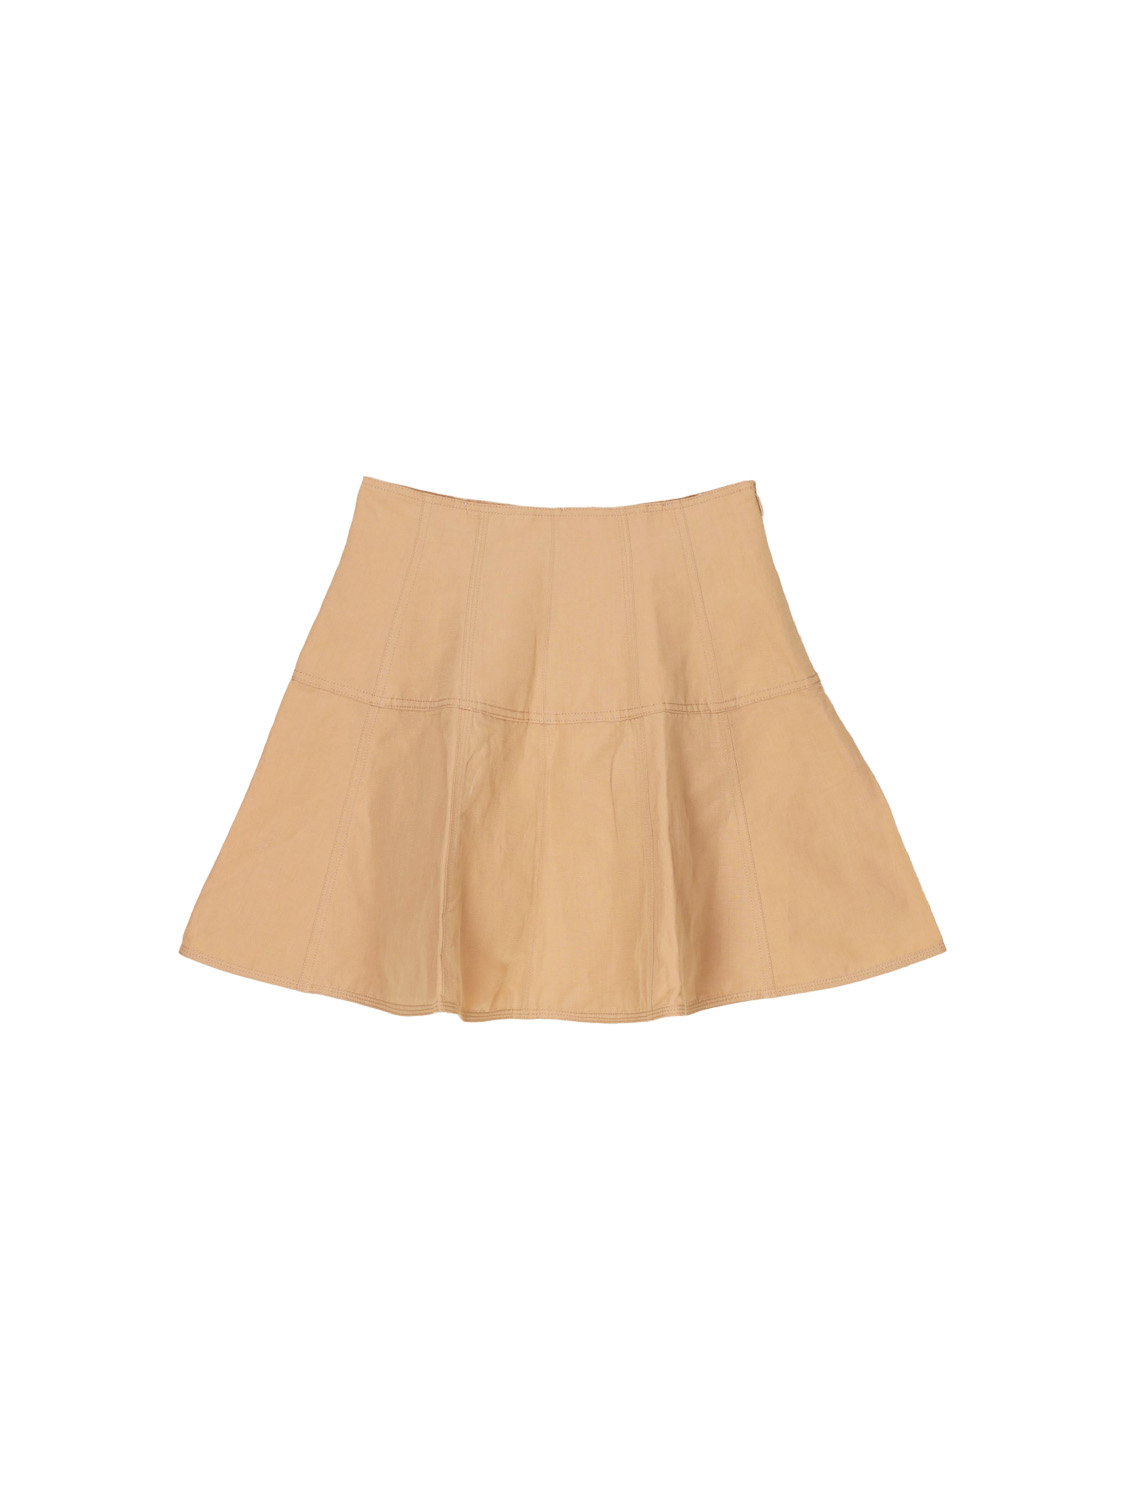 Kiara - Flared mini skirt made from fine natural fibres 